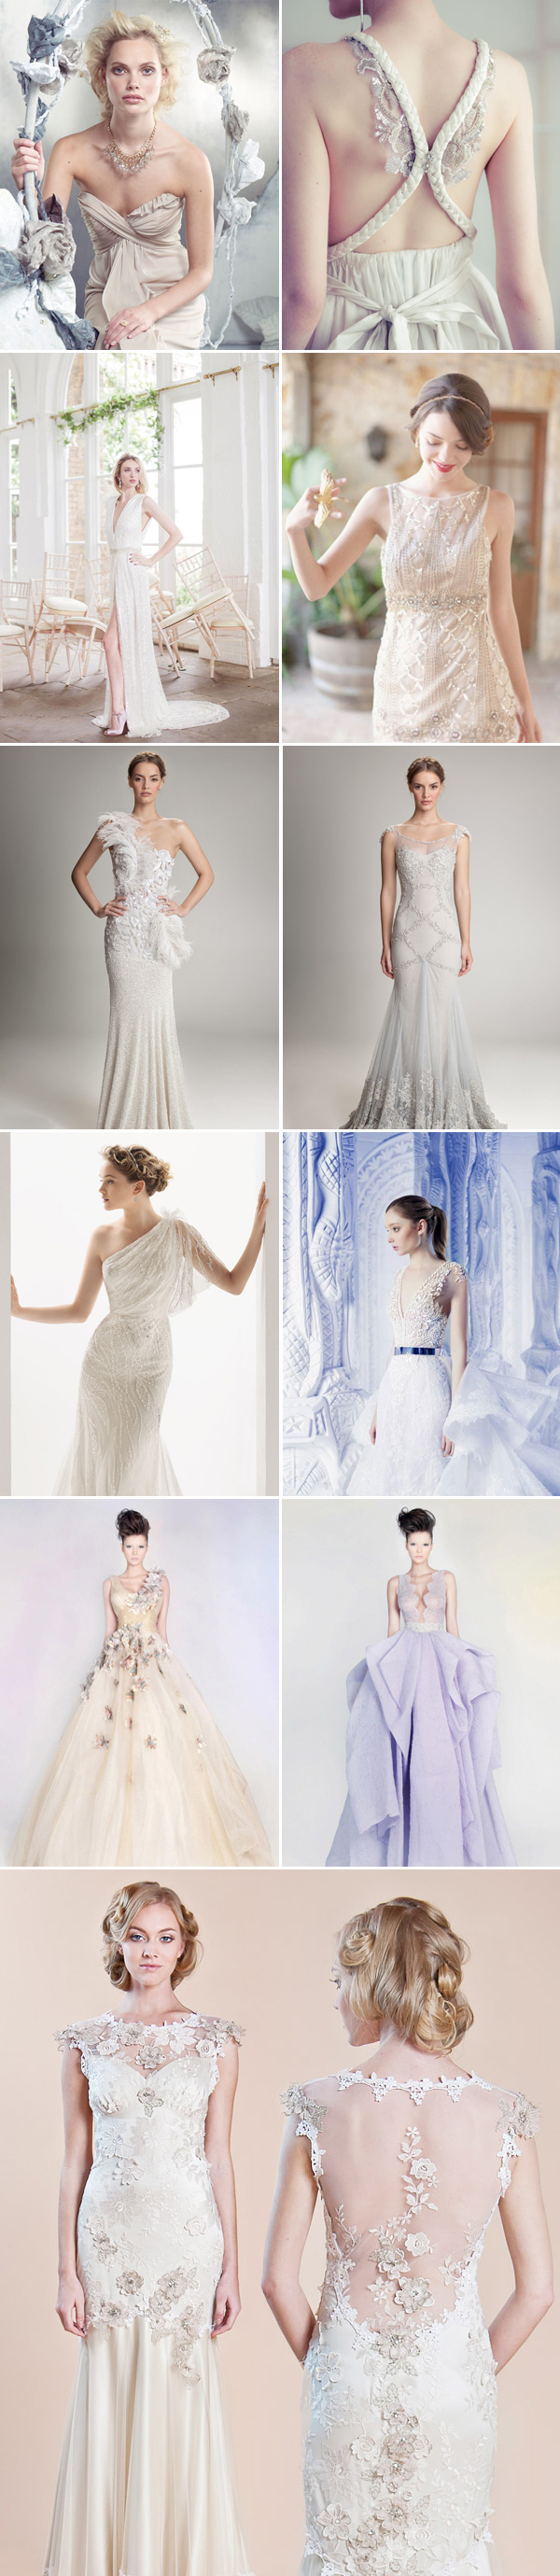 elegant reception gowns